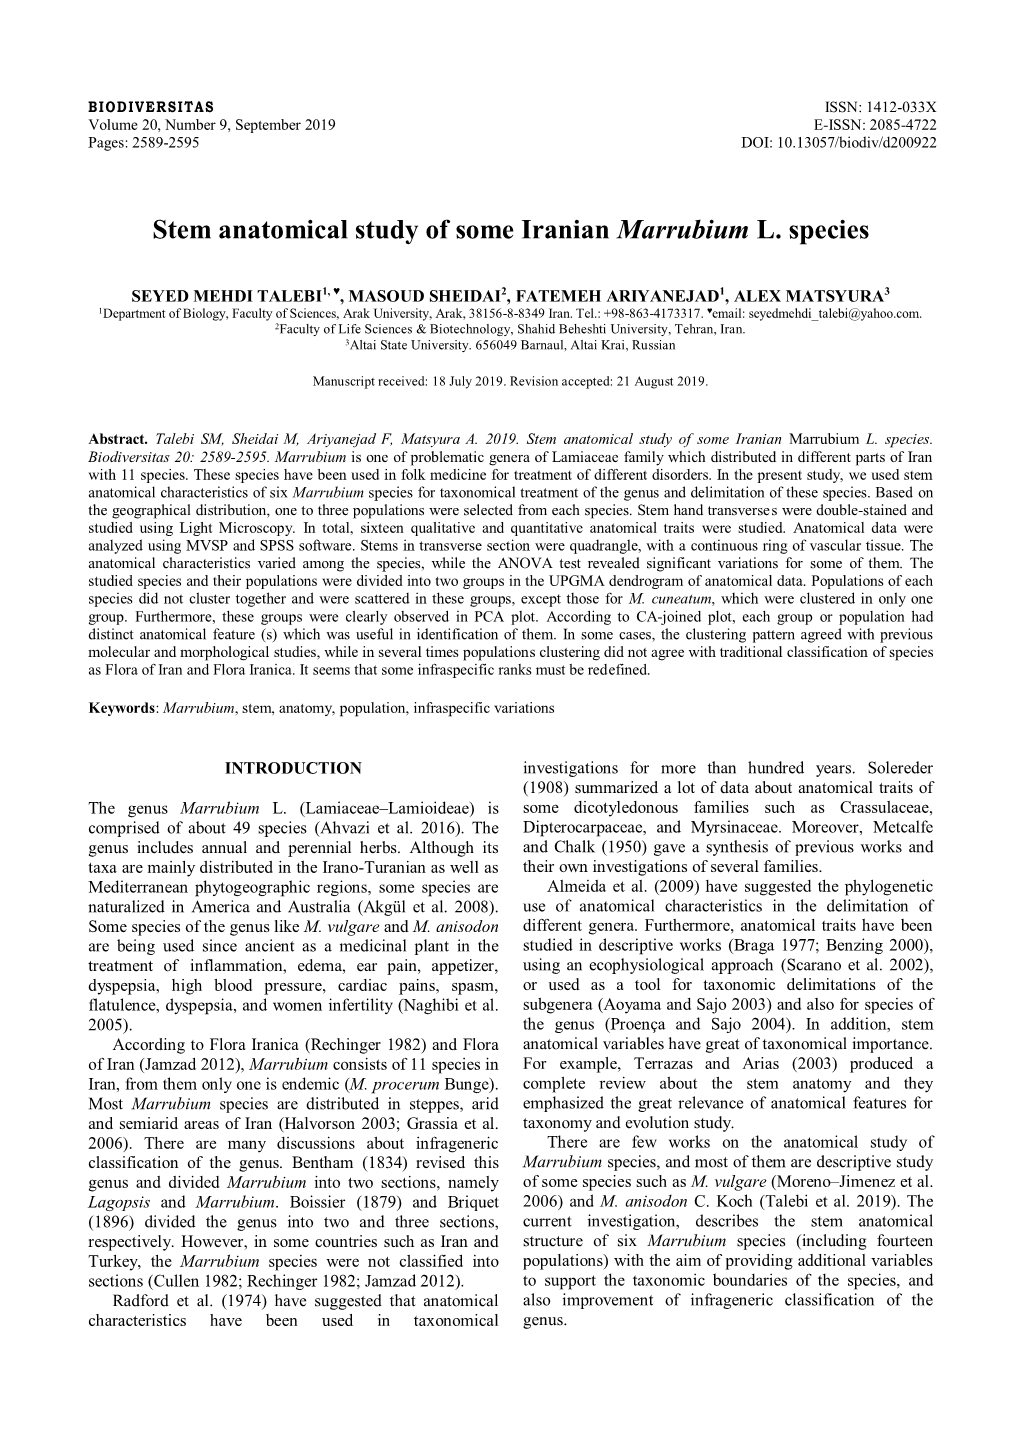 Stem Anatomical Study of Some Iranian Marrubium L. Species